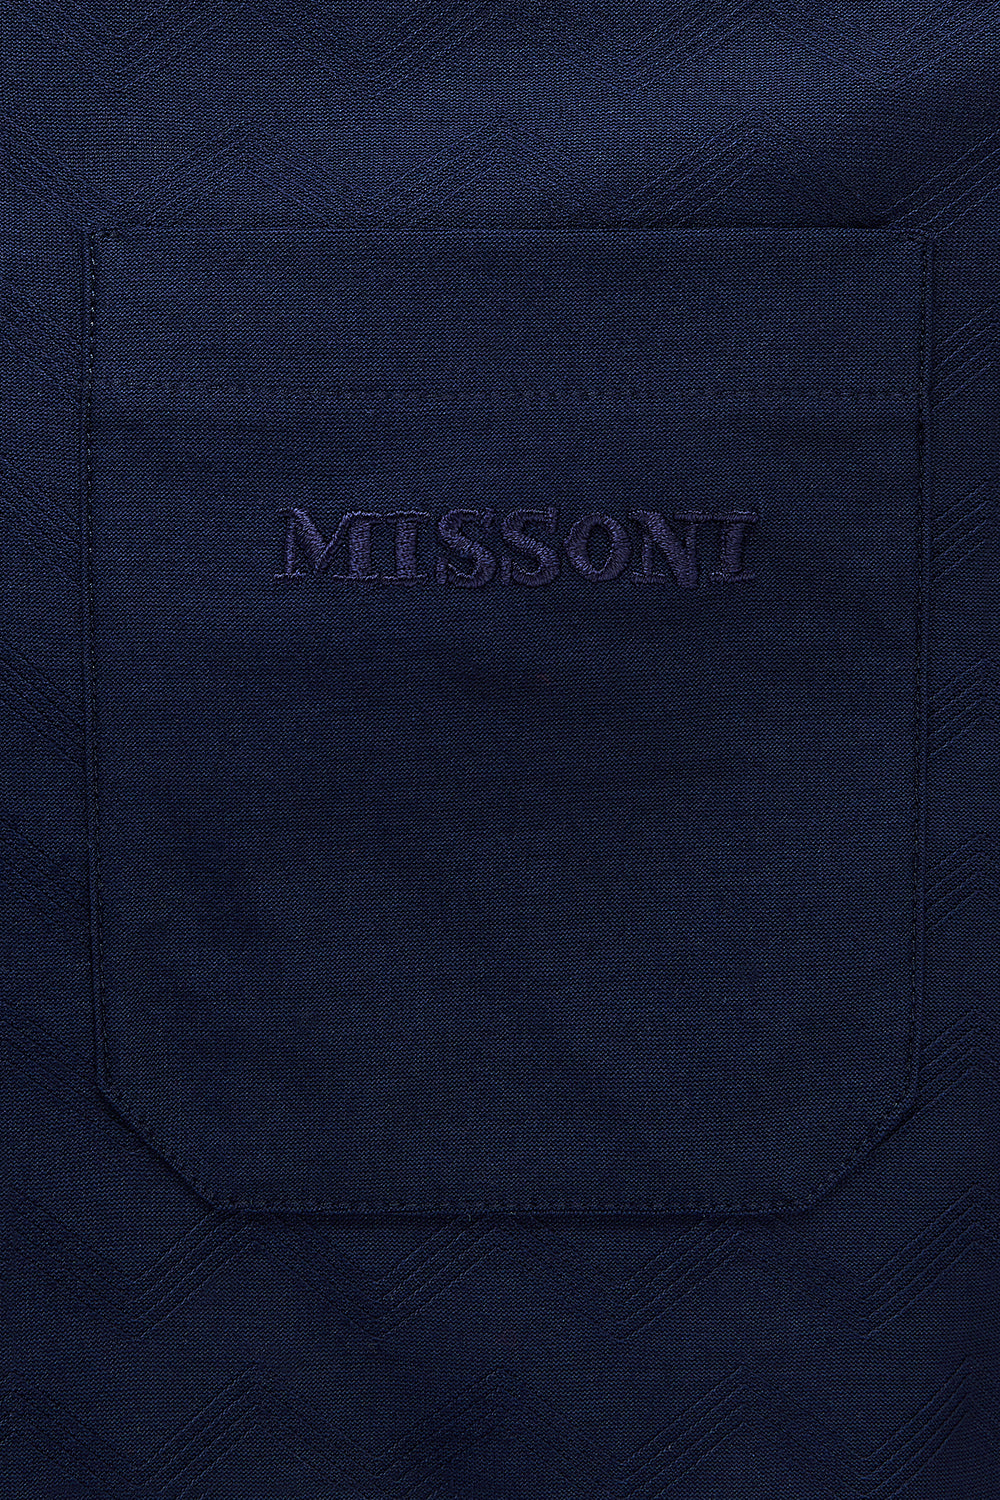 Missoni Men's Seraphim Polo Shirt Navy - Close Up Pocket